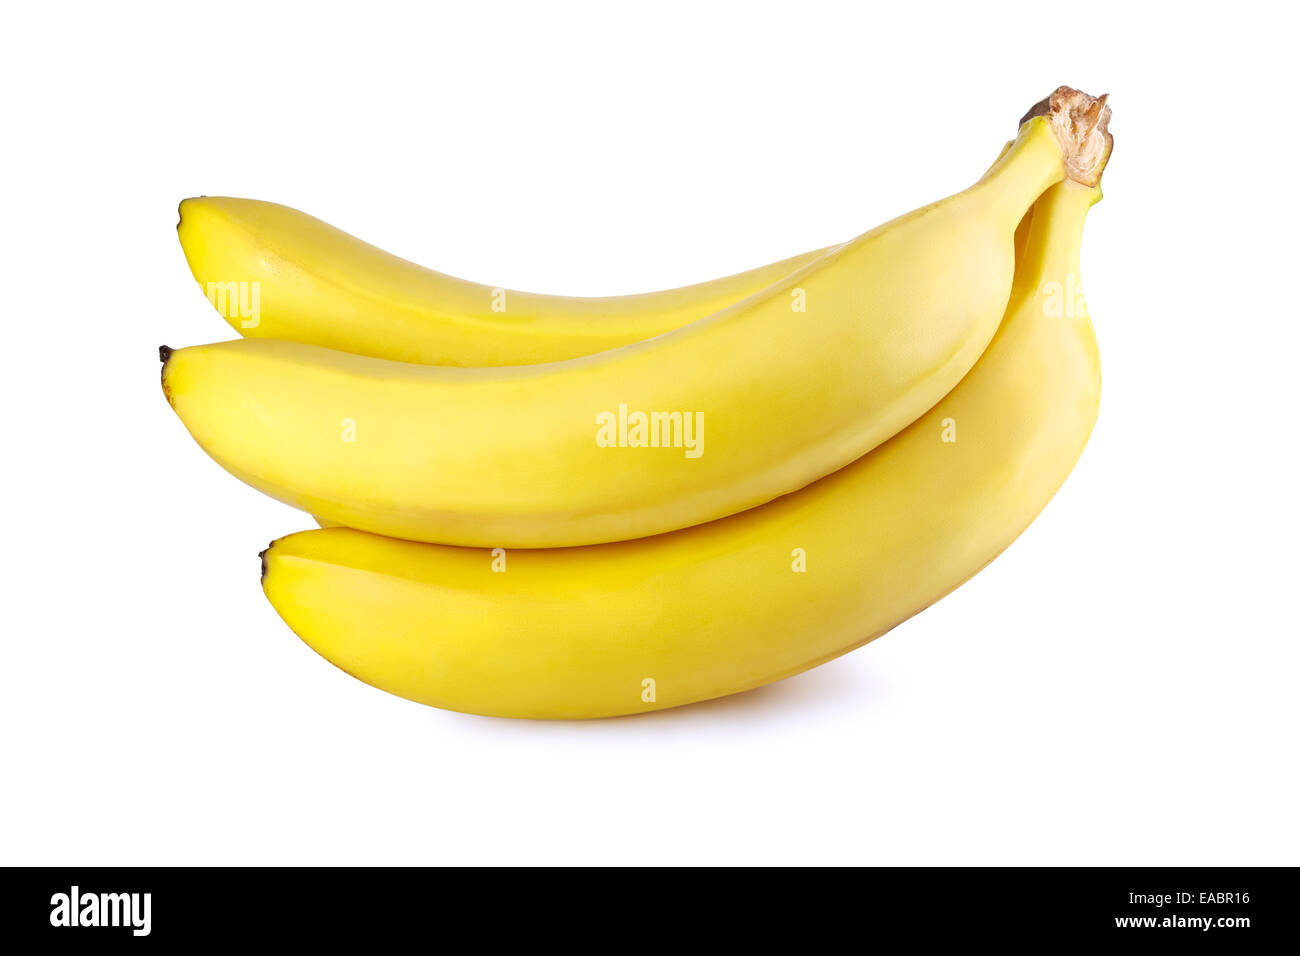 Bunch of ripe bananas on white background. Stock Photo